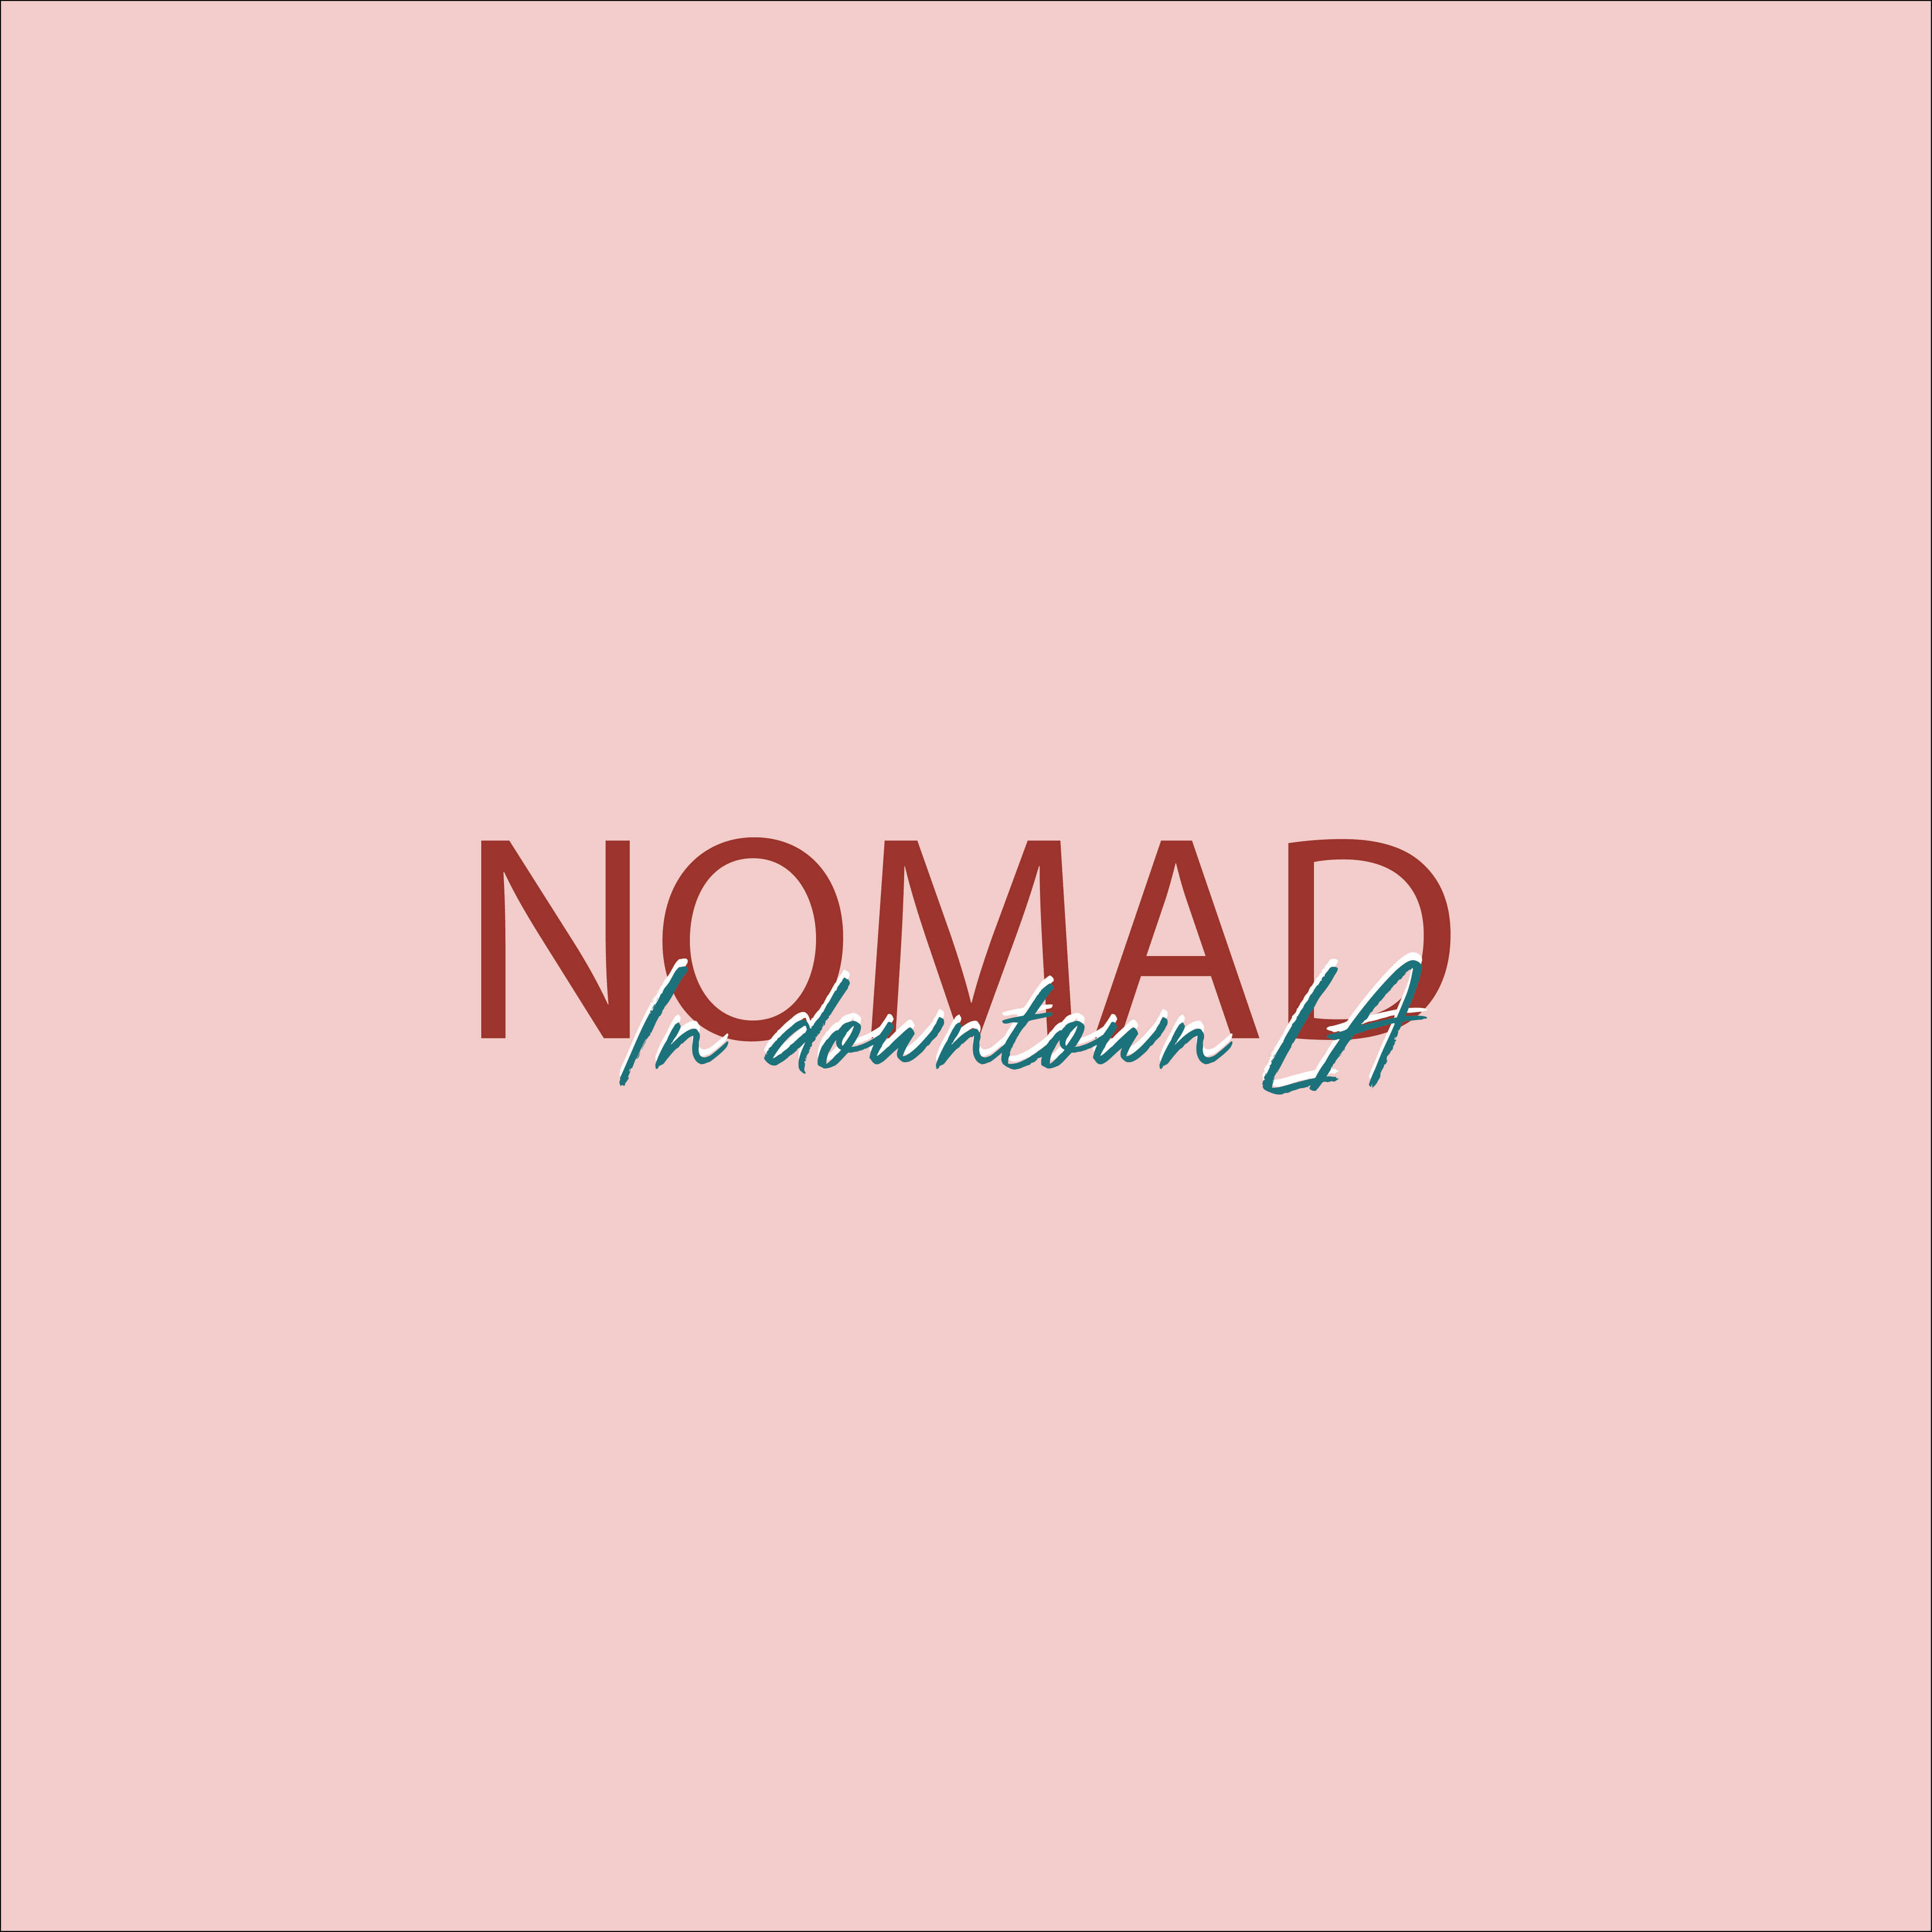 Nomad-05